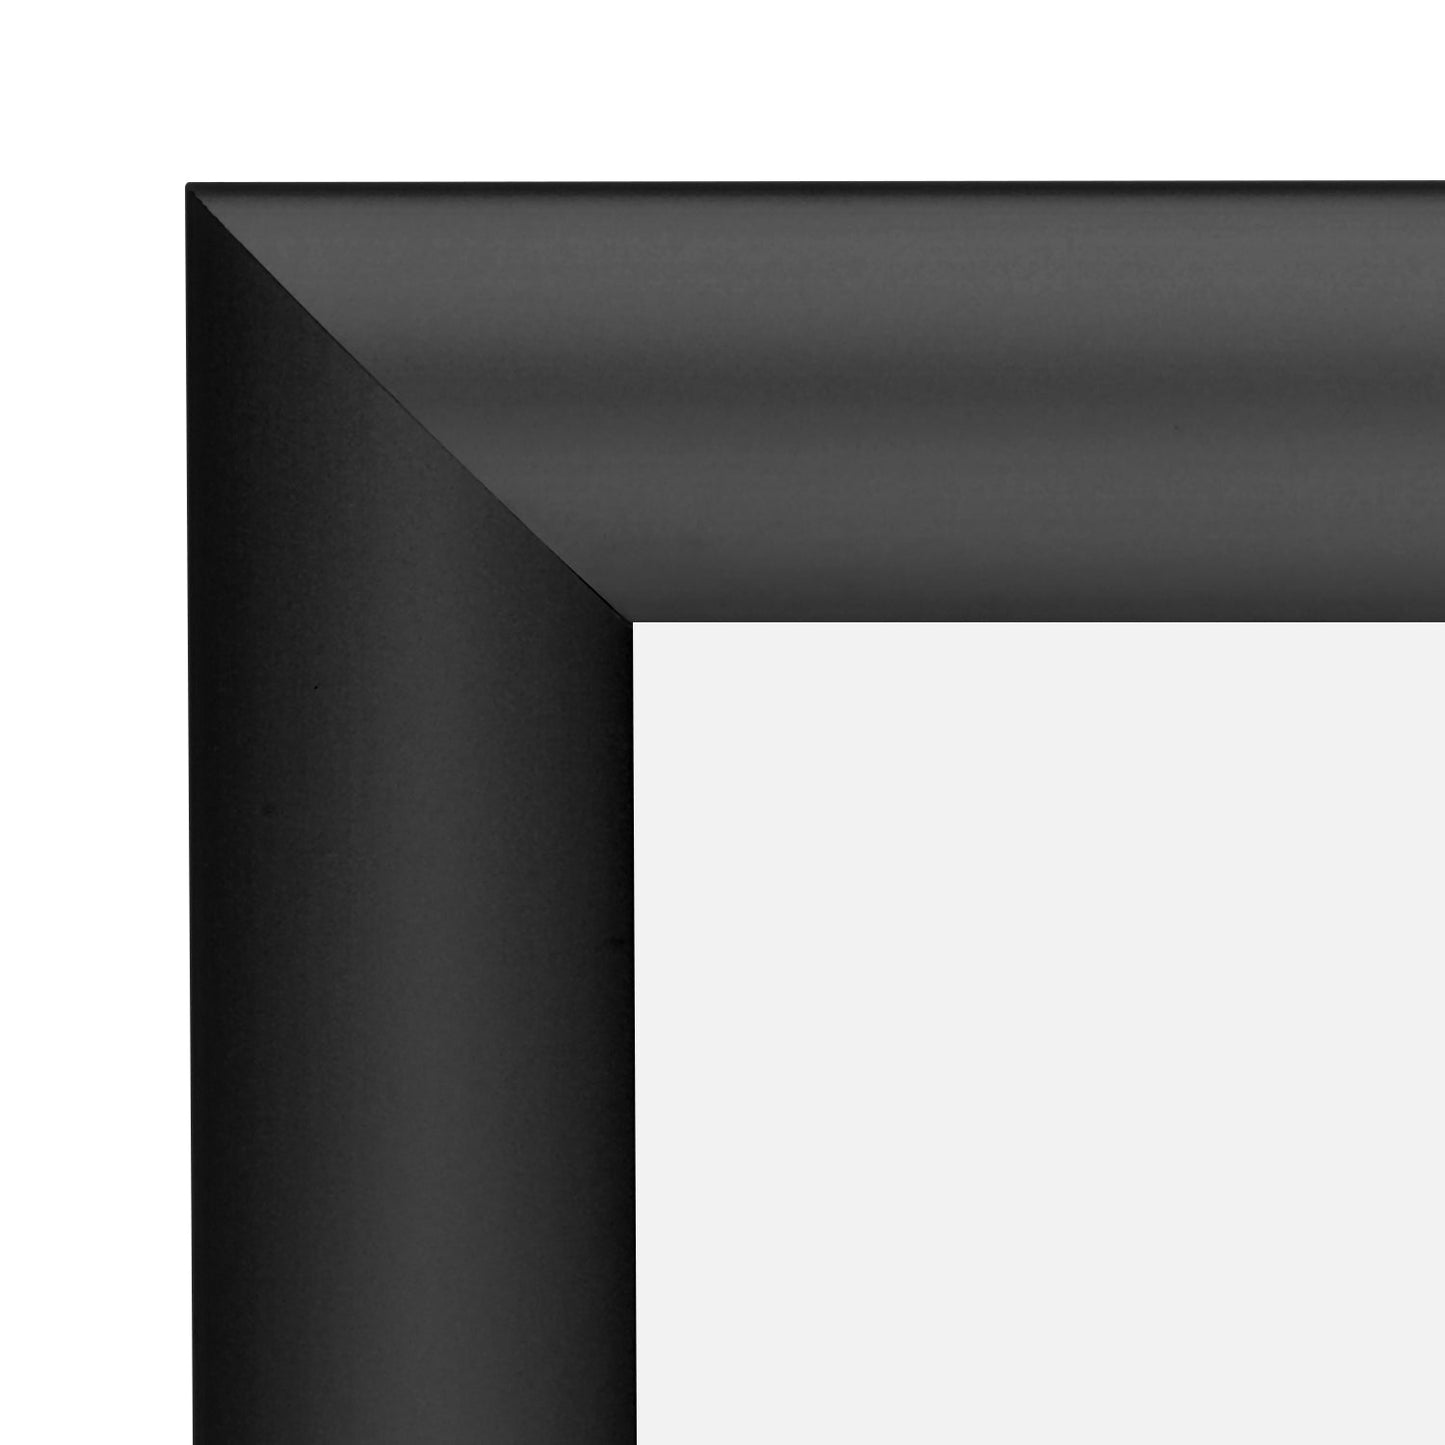 11x17 Black SnapeZo® Snap Frame - 1" Profile